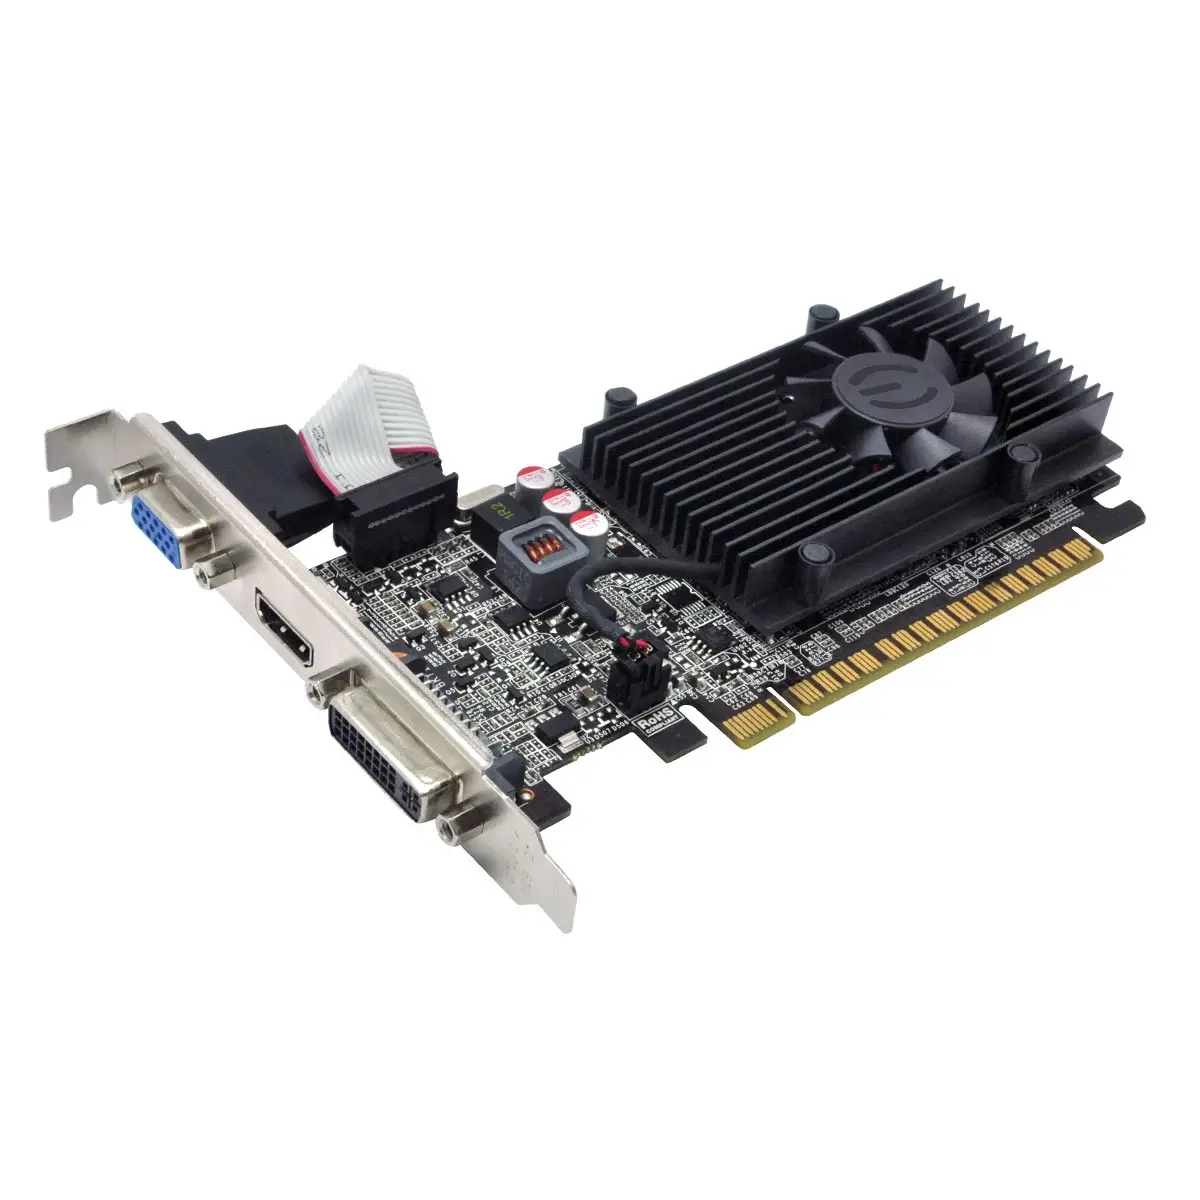 02G-P3-2619-KR EVGA GeForce GT 610 2048MB GDDR3, DVI, VGA and HDMI Graphics Card